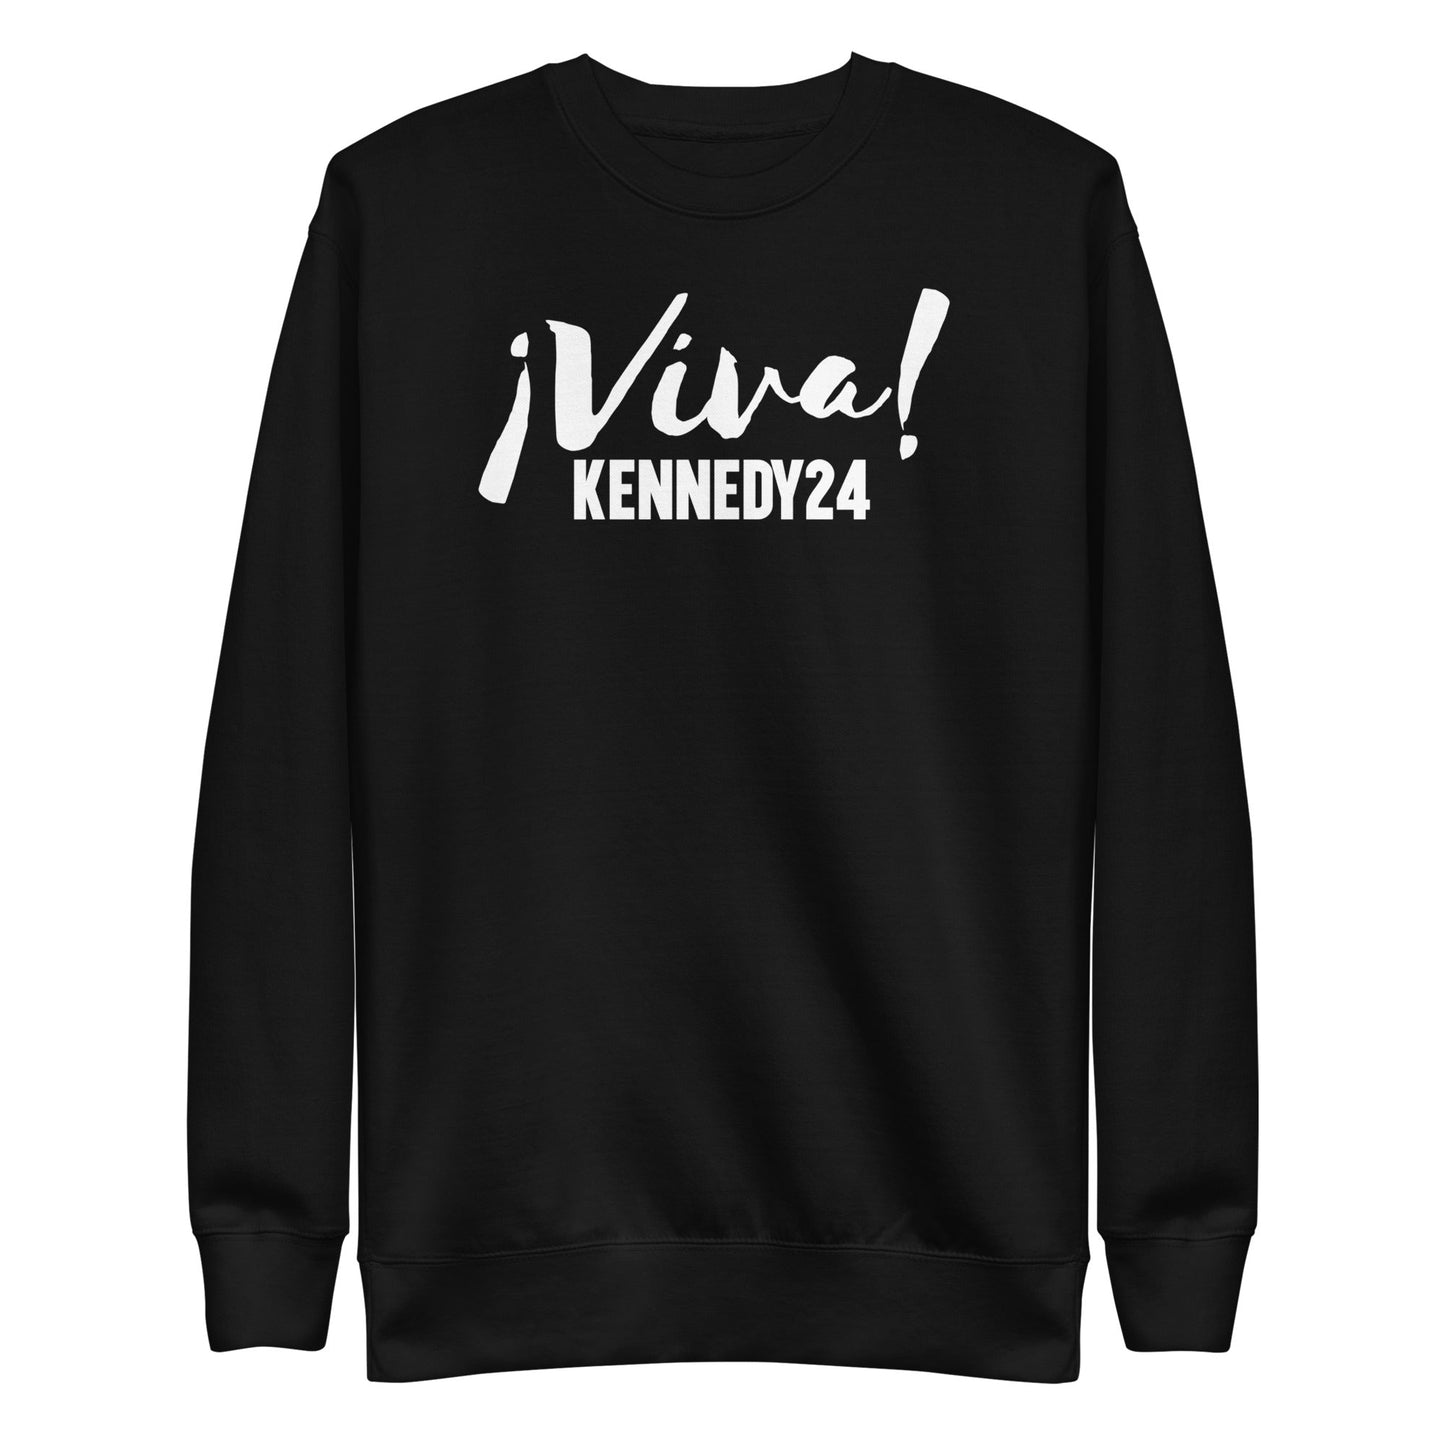 Viva Kennedy24 Unisex Premium Sweatshirt - TEAM KENNEDY. All rights reserved